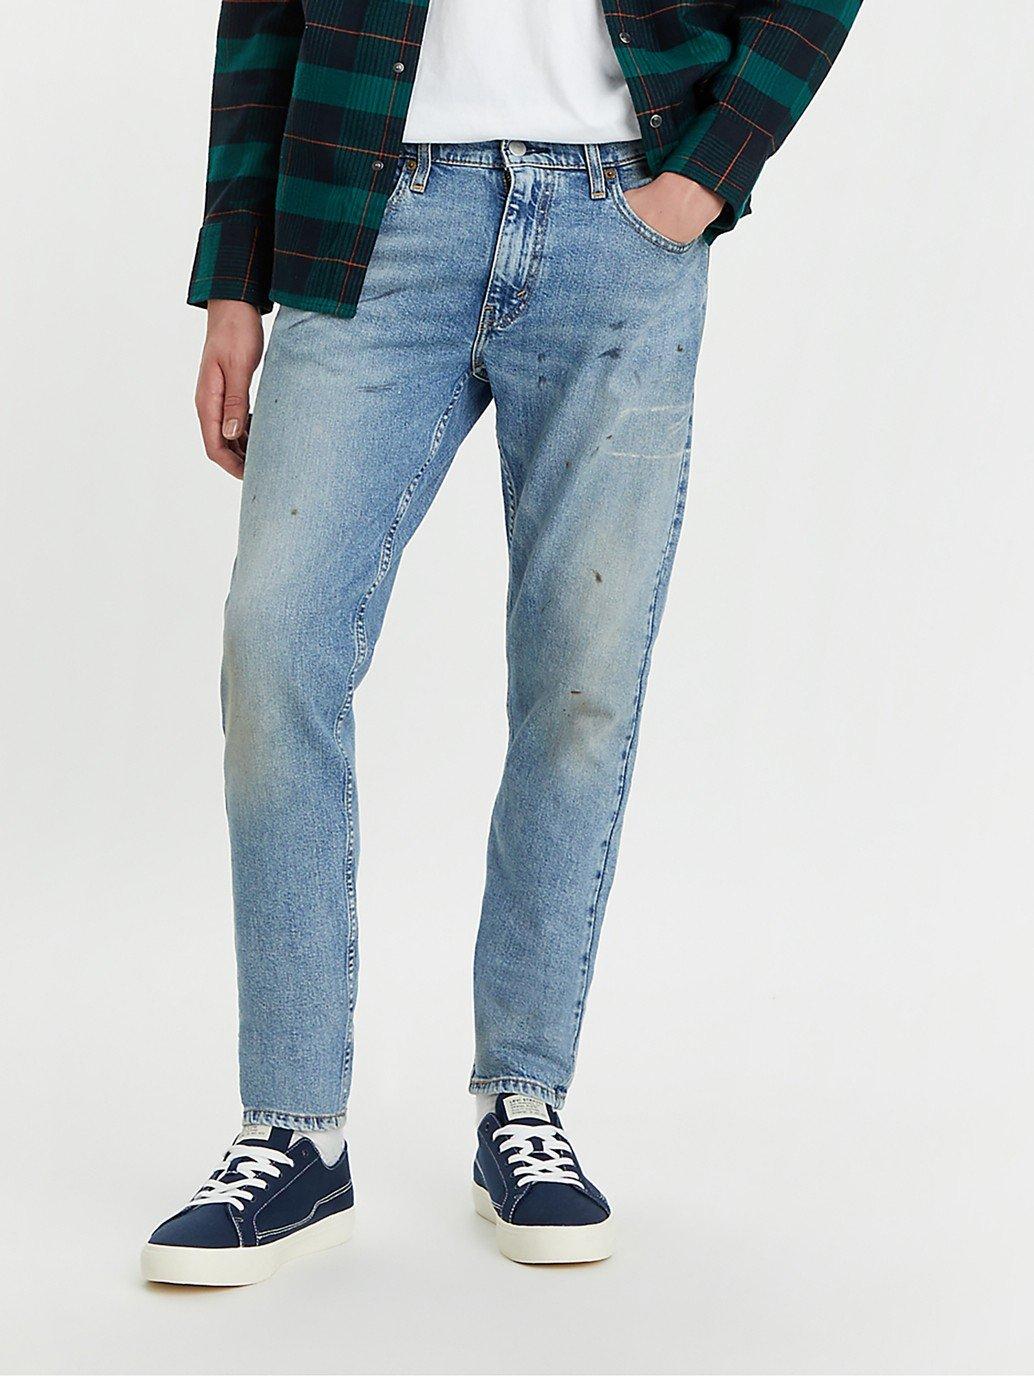 Buy Men's 512™ Taper Jeans | Levi's® Online Store